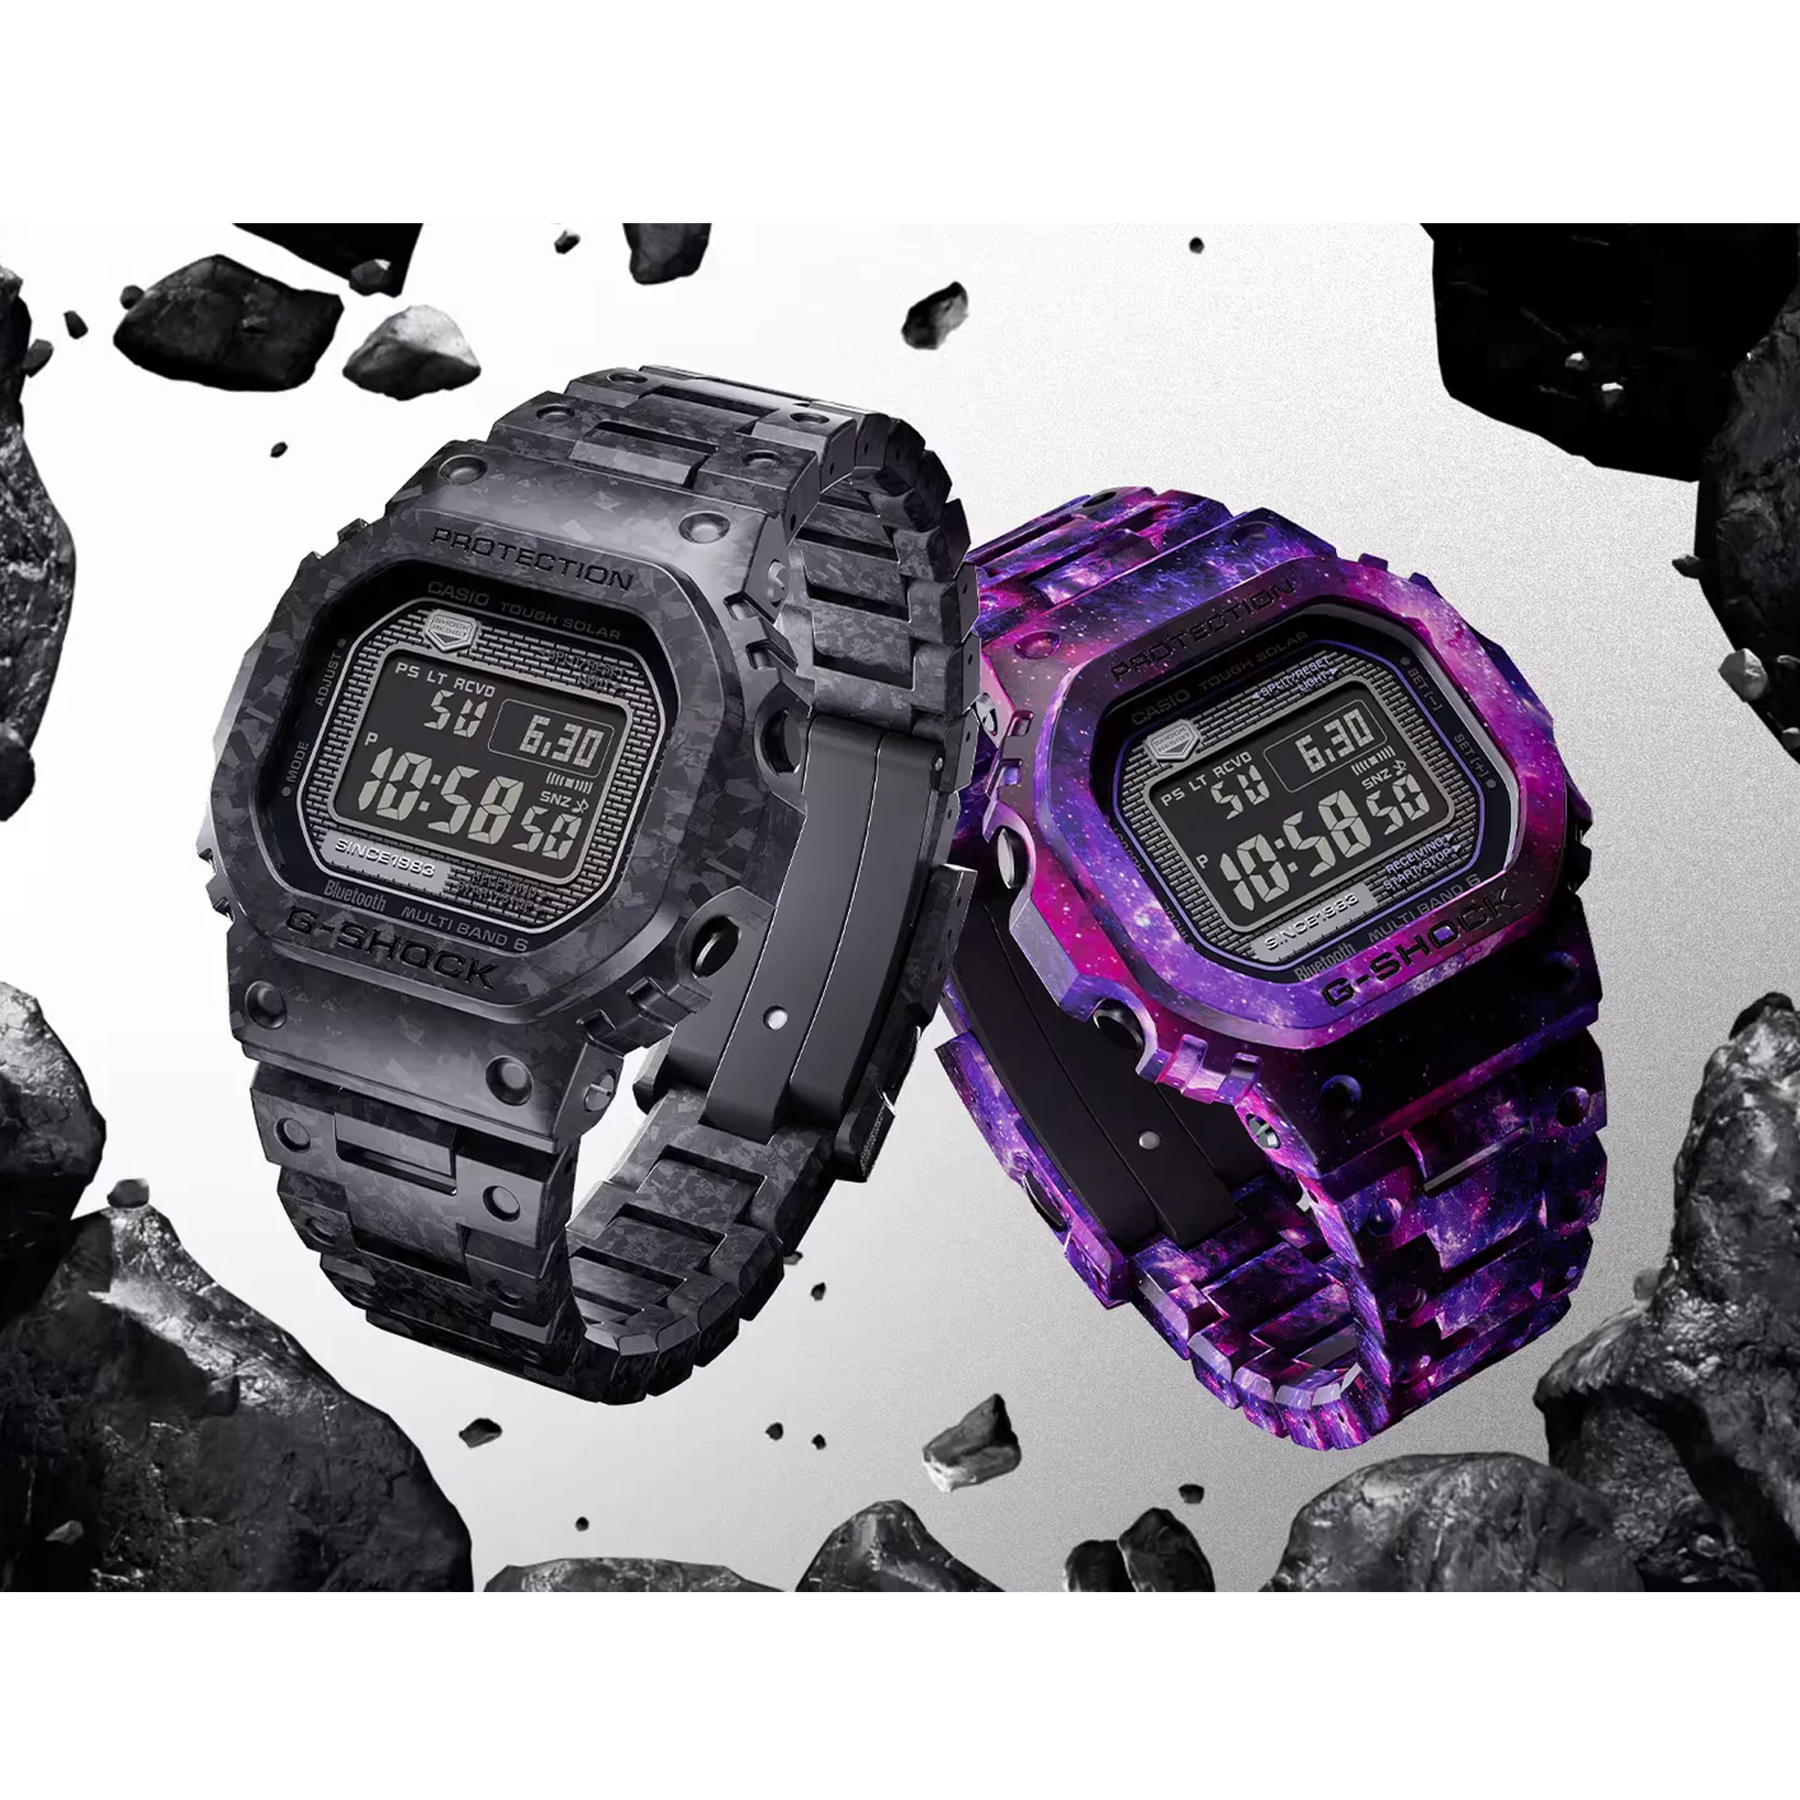 Casio G-SHOCK Men's 40th Anniversary Carbon Edition Solar Watch GCWB5000UN-6D